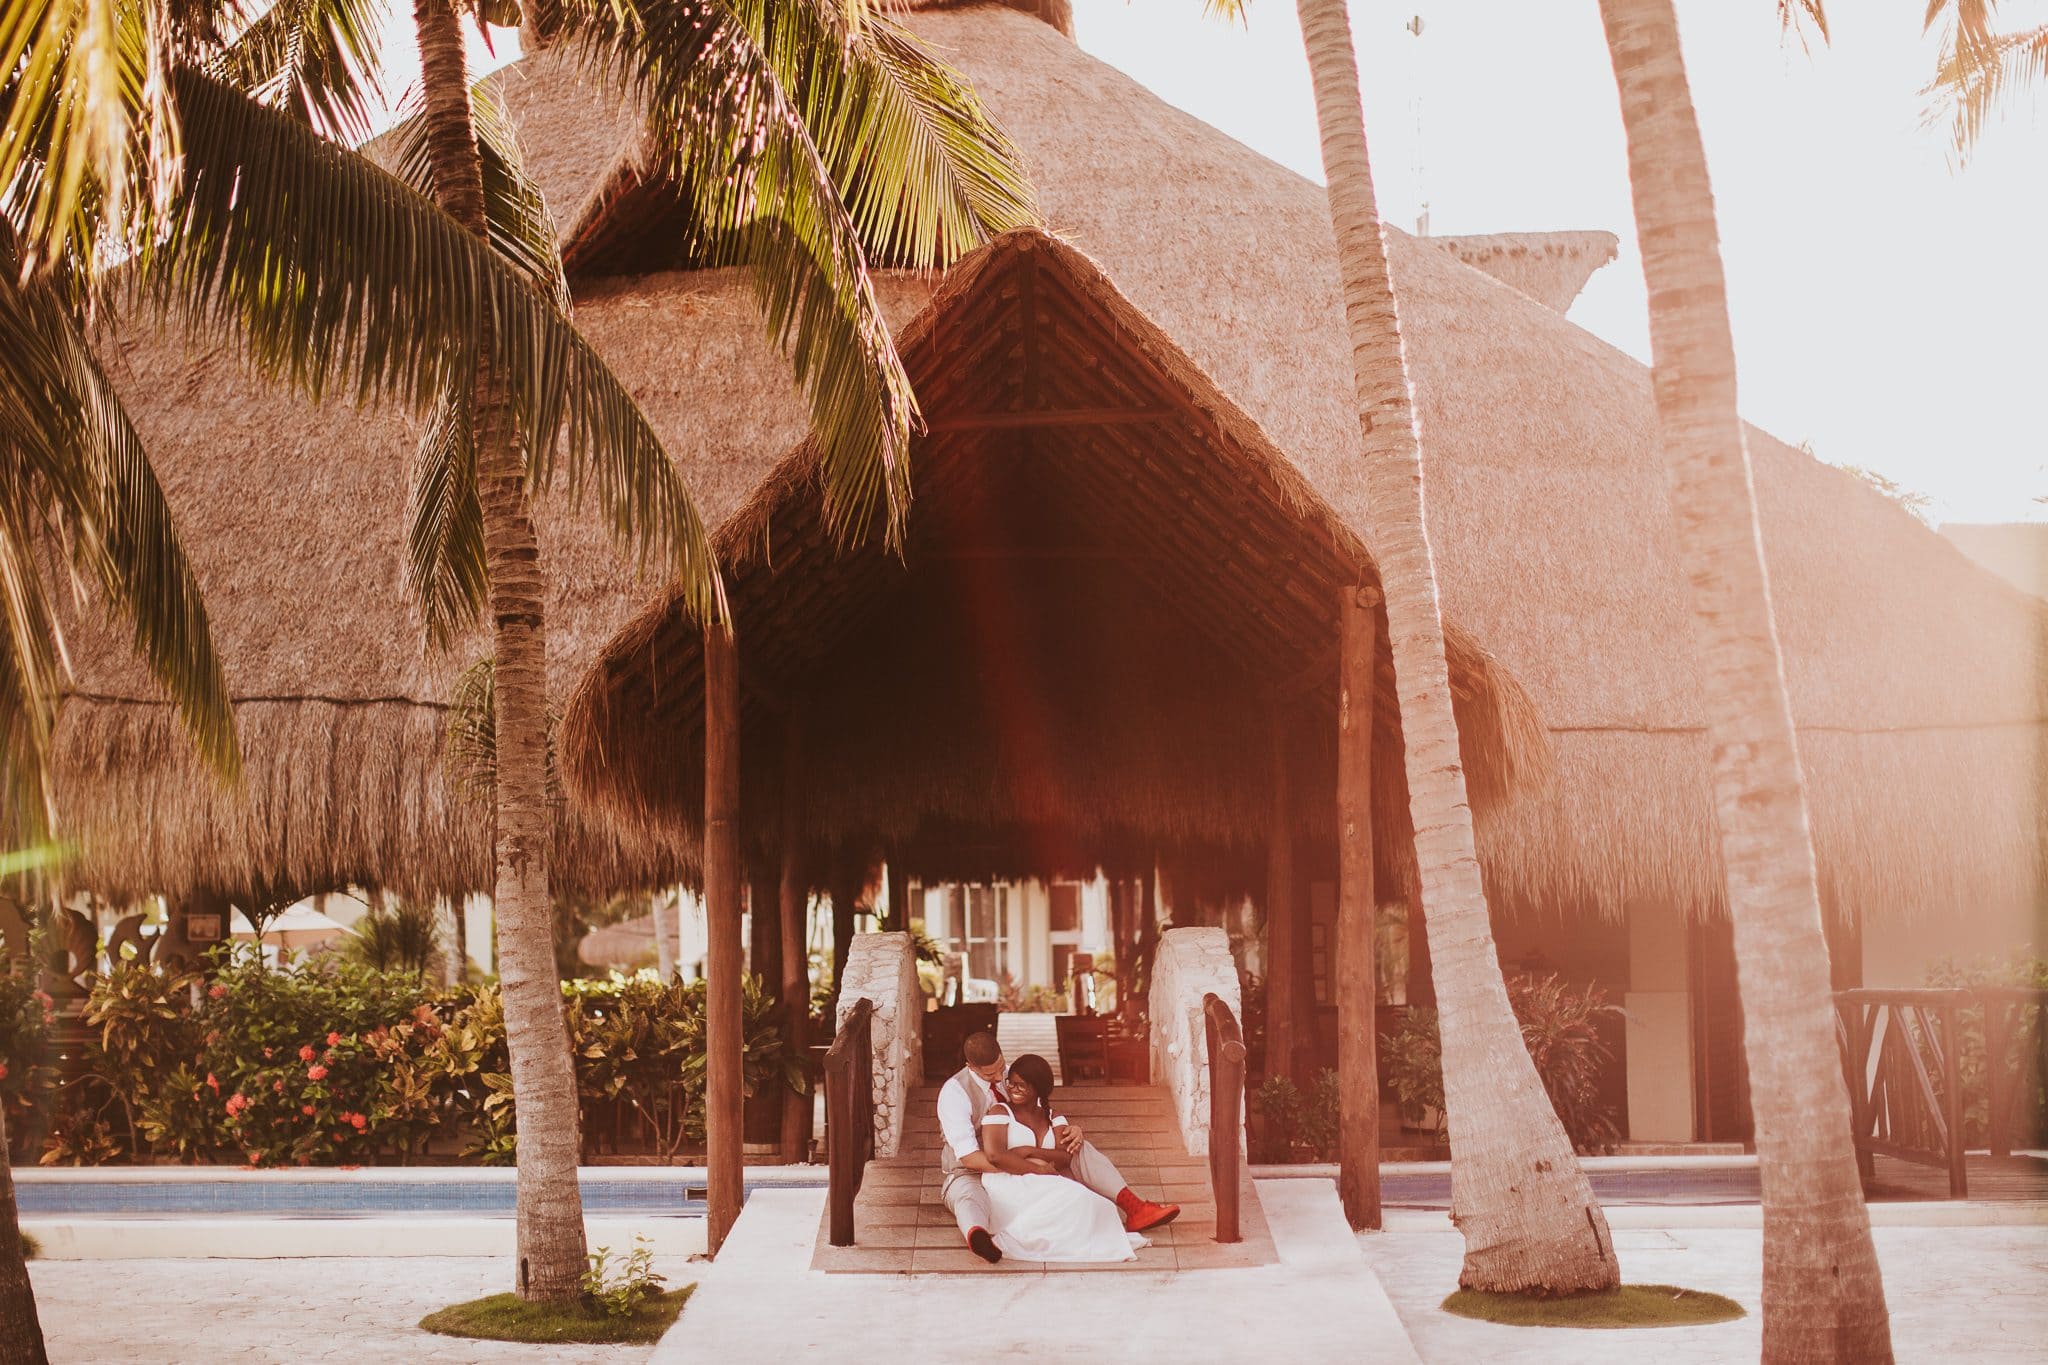 Destination Wedding in Mexico